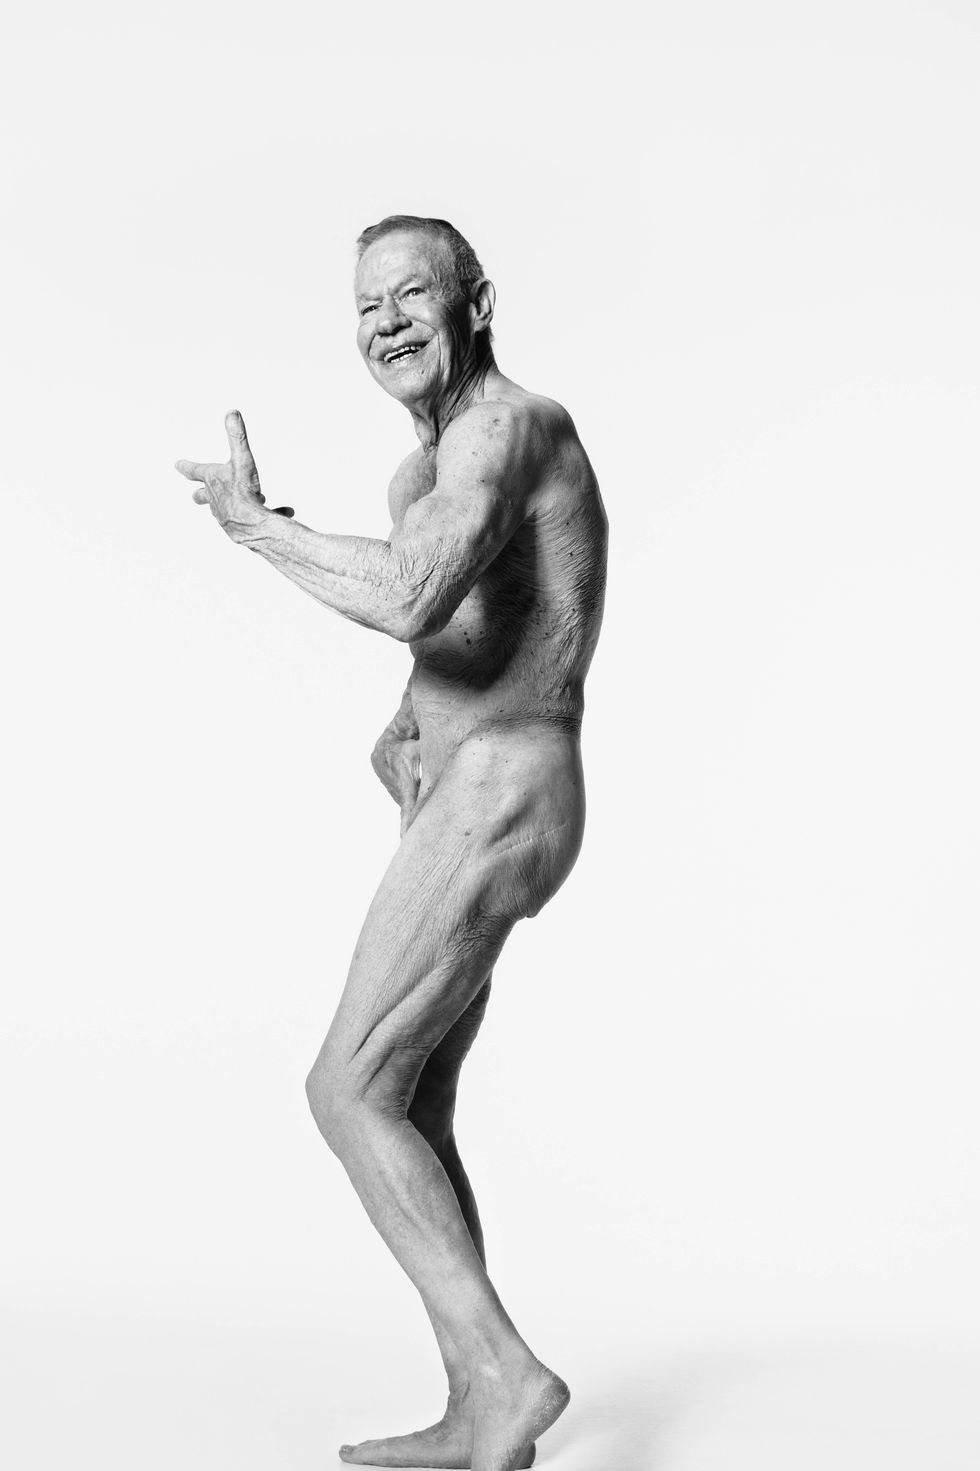 Jim Arrington, The World's Oldest BodyBuilder, Shares His Strength